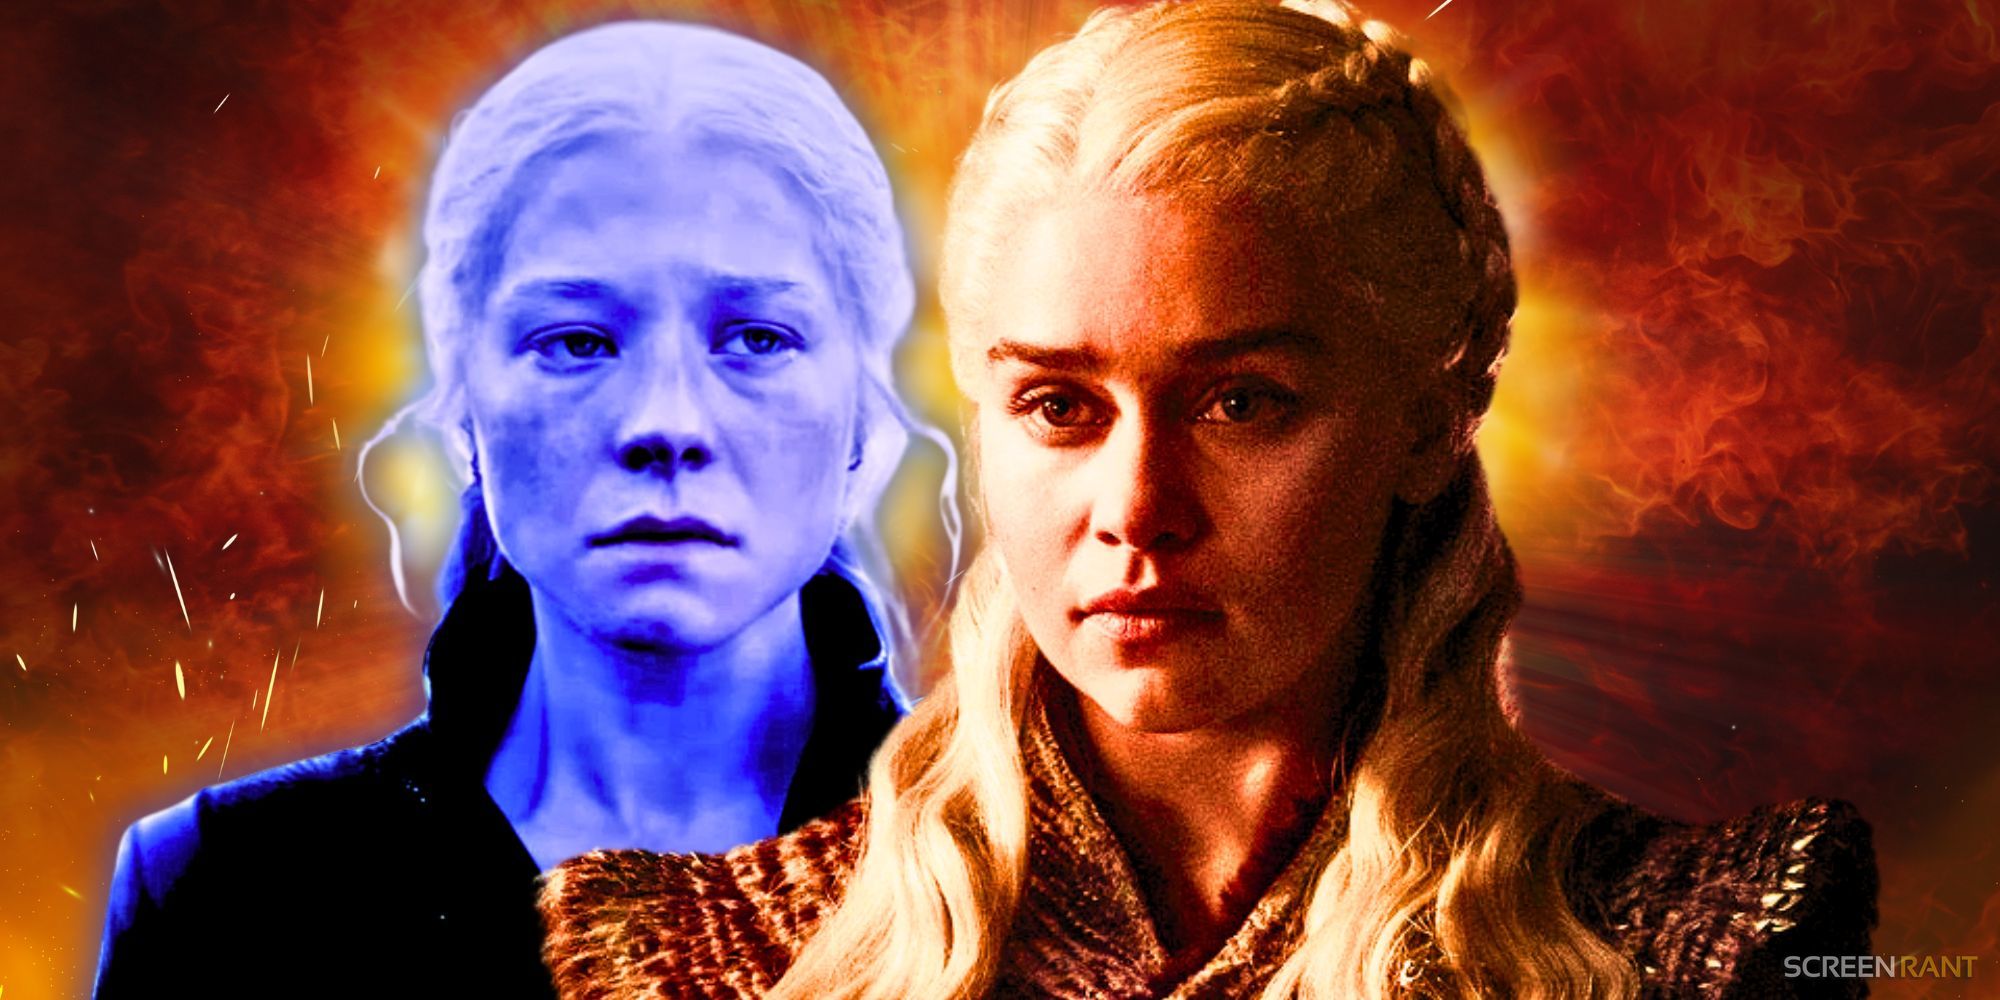 Emma D'Aarcy as Rhaenyra Targaryen in House of the Dragon season 2, shaded in blue, alongside Emilia Clarke as Daenerys in Game of Thrones season 8, with a fiery background